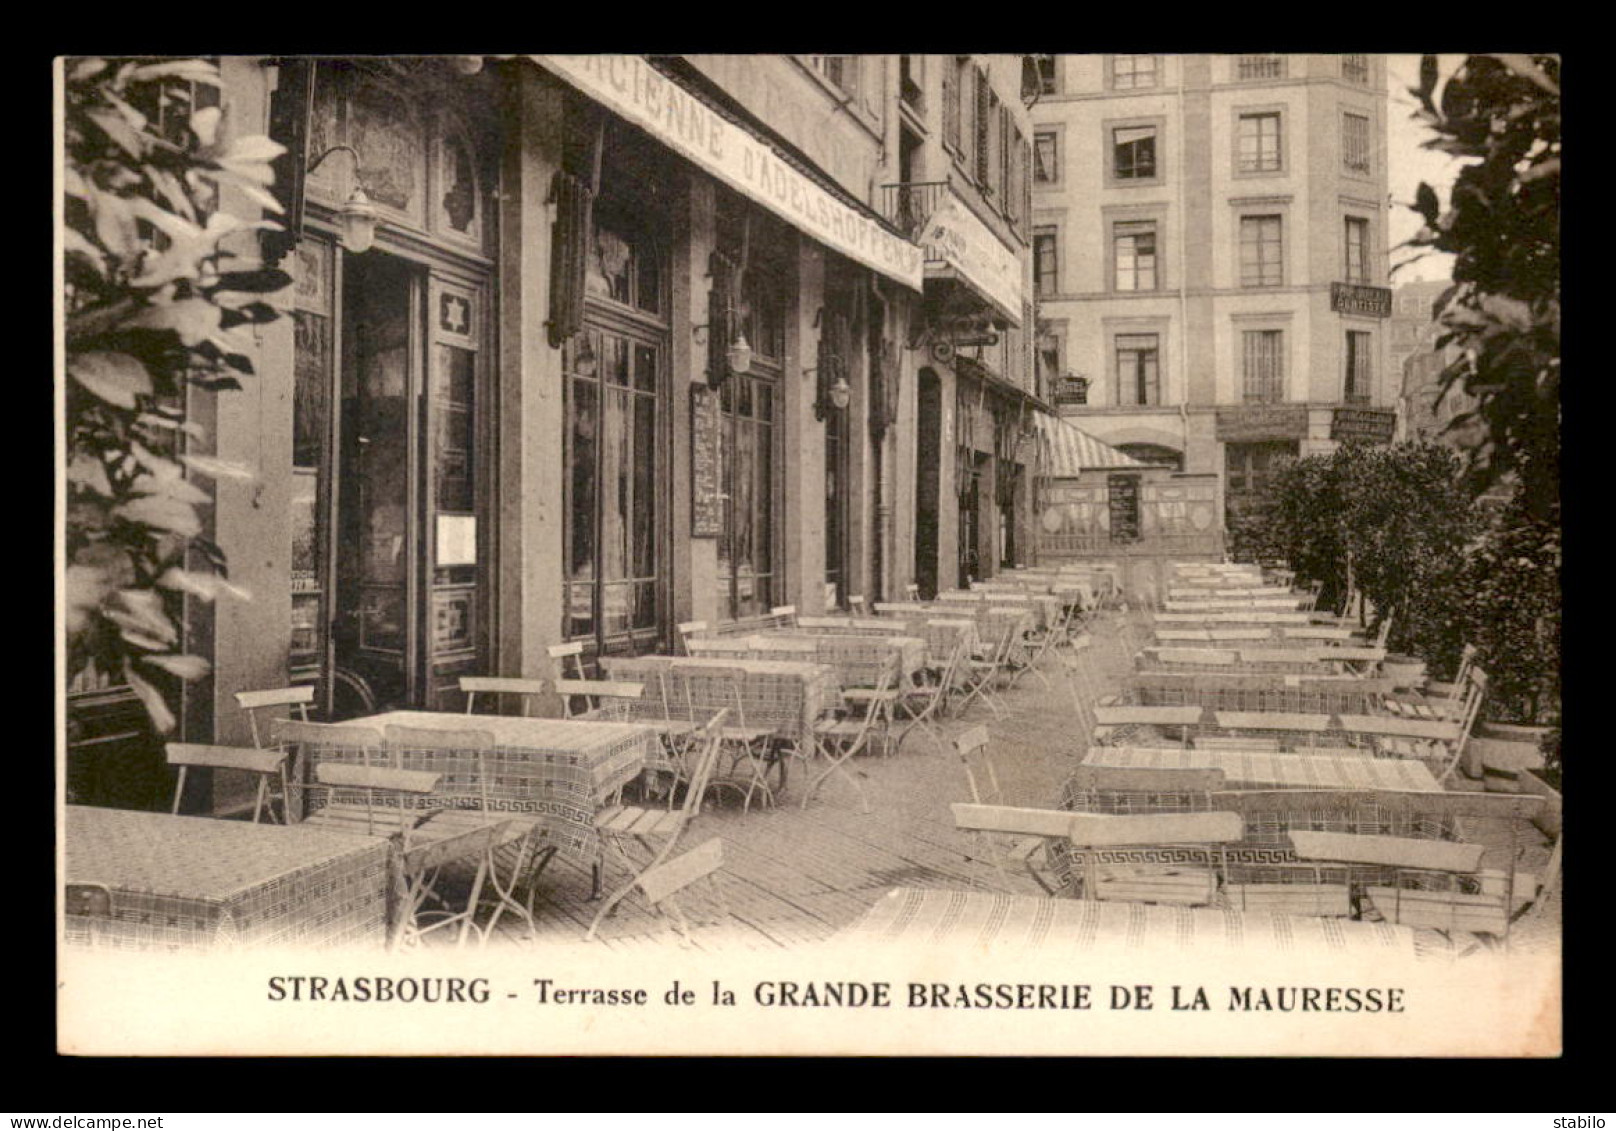 67 - STRASBOURG - GRANDE BRASSERIE DE LA MAURESSE - LA TERRASSE - Strasbourg